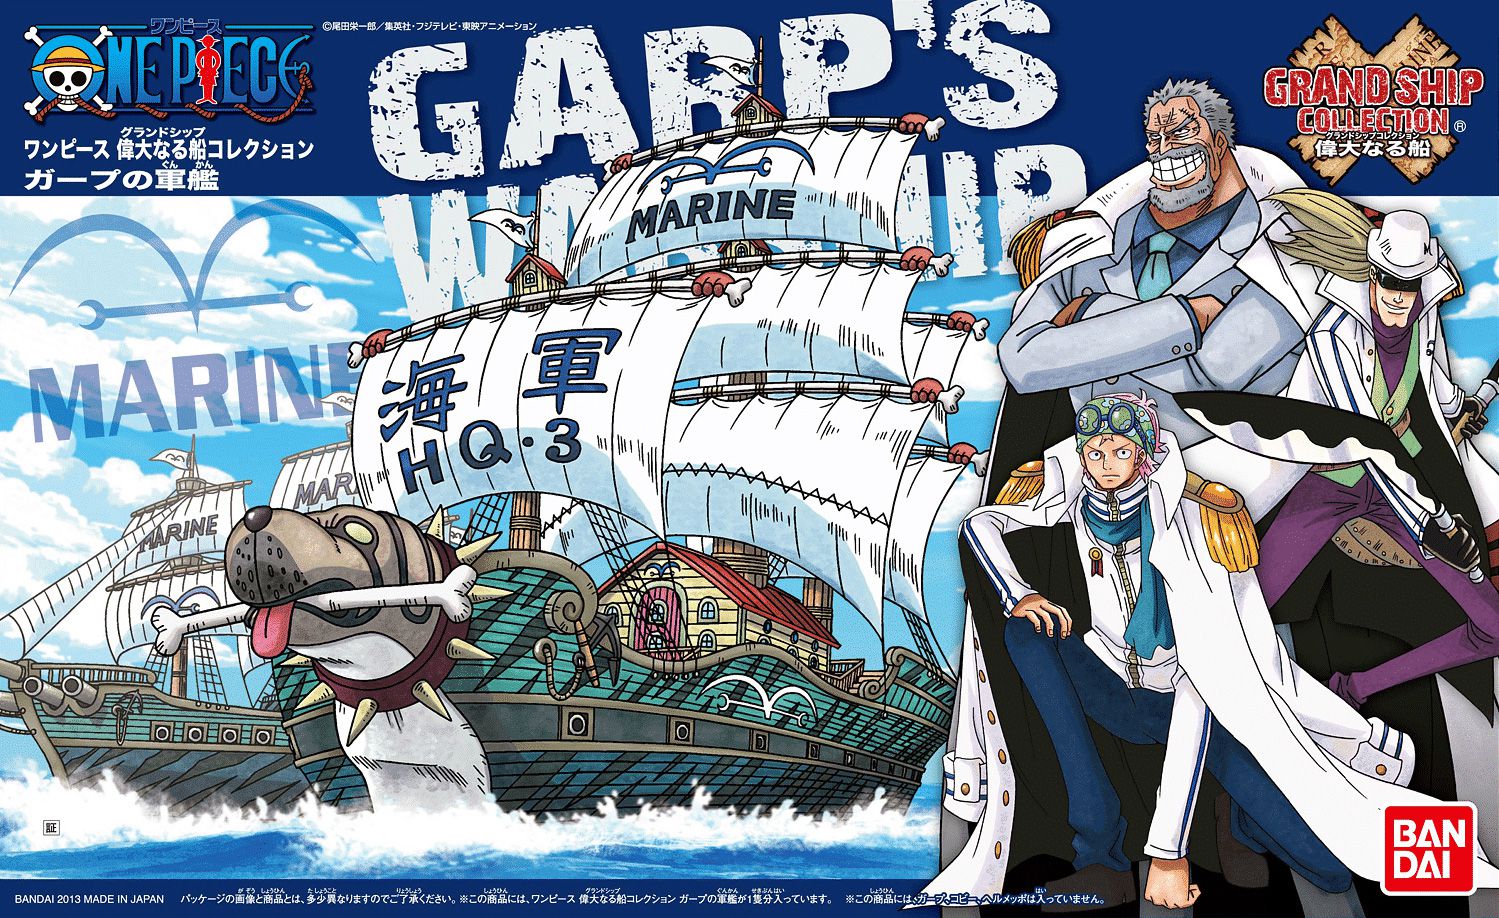 Garp's Warship Grand Ship Collection 08 - One Piece Bandai | Glacier Hobbies